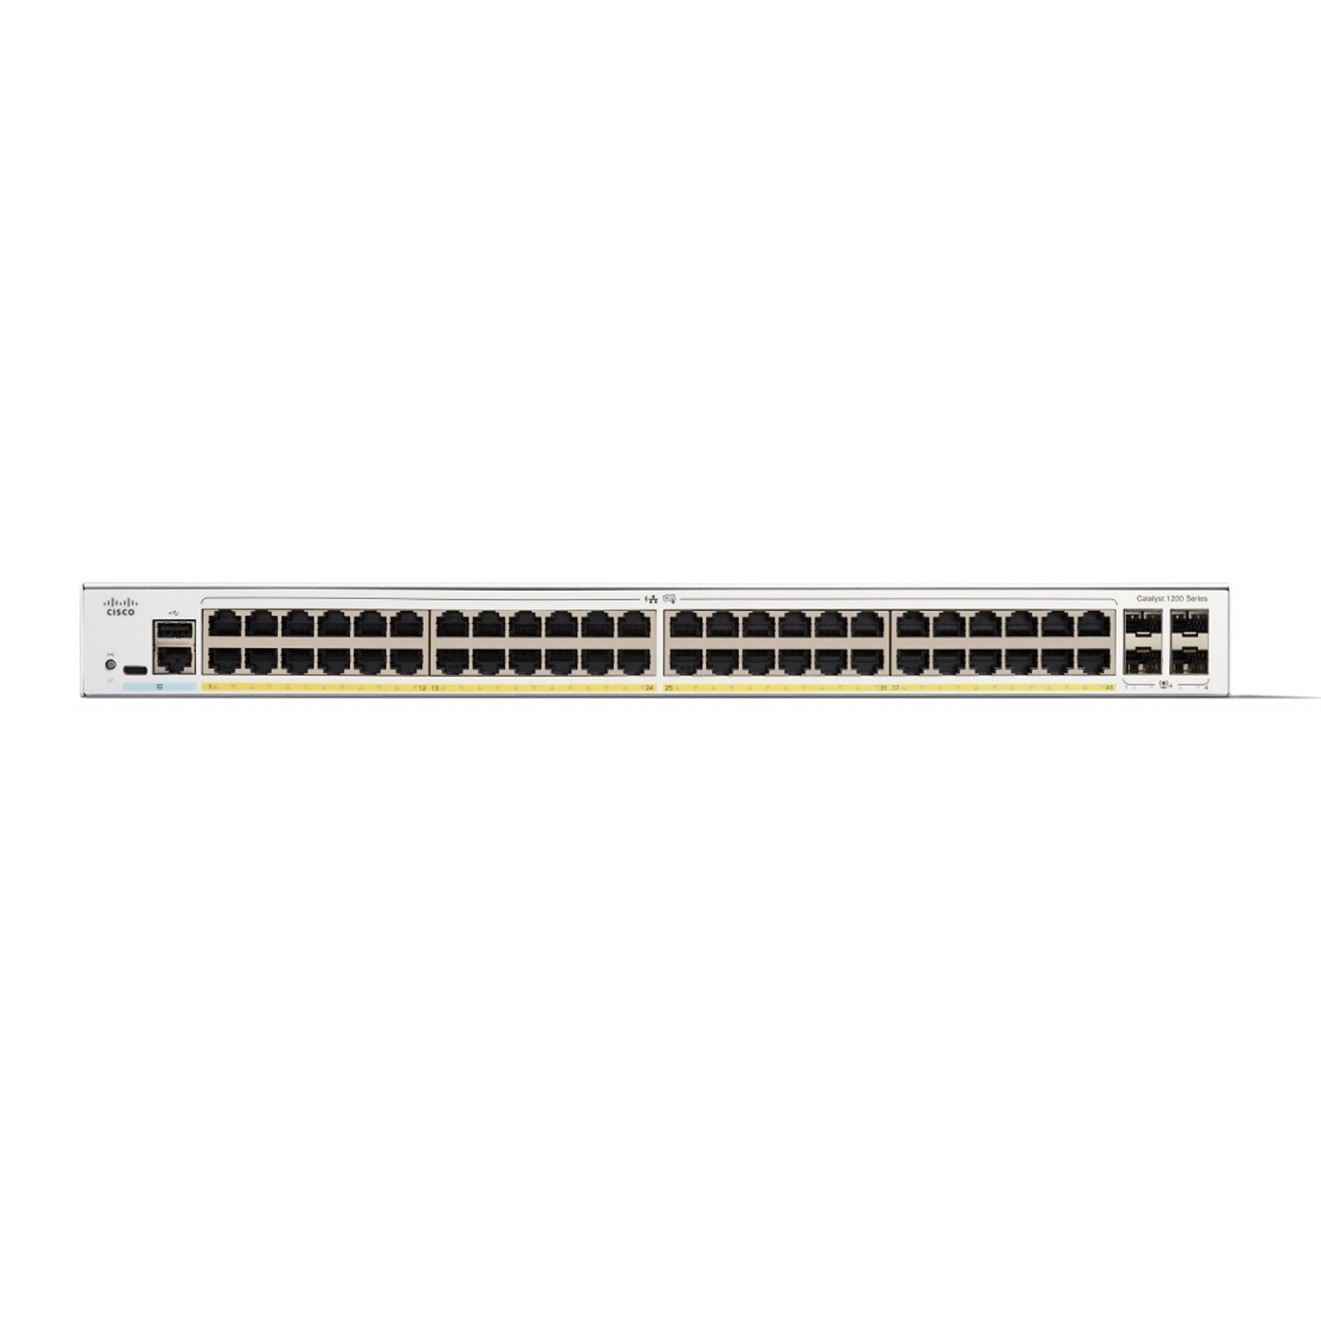 Cisco catalyst C1200-48P, 48 ports gigabit POE+ 375W + 4 x 1G SFP uplink ports switch